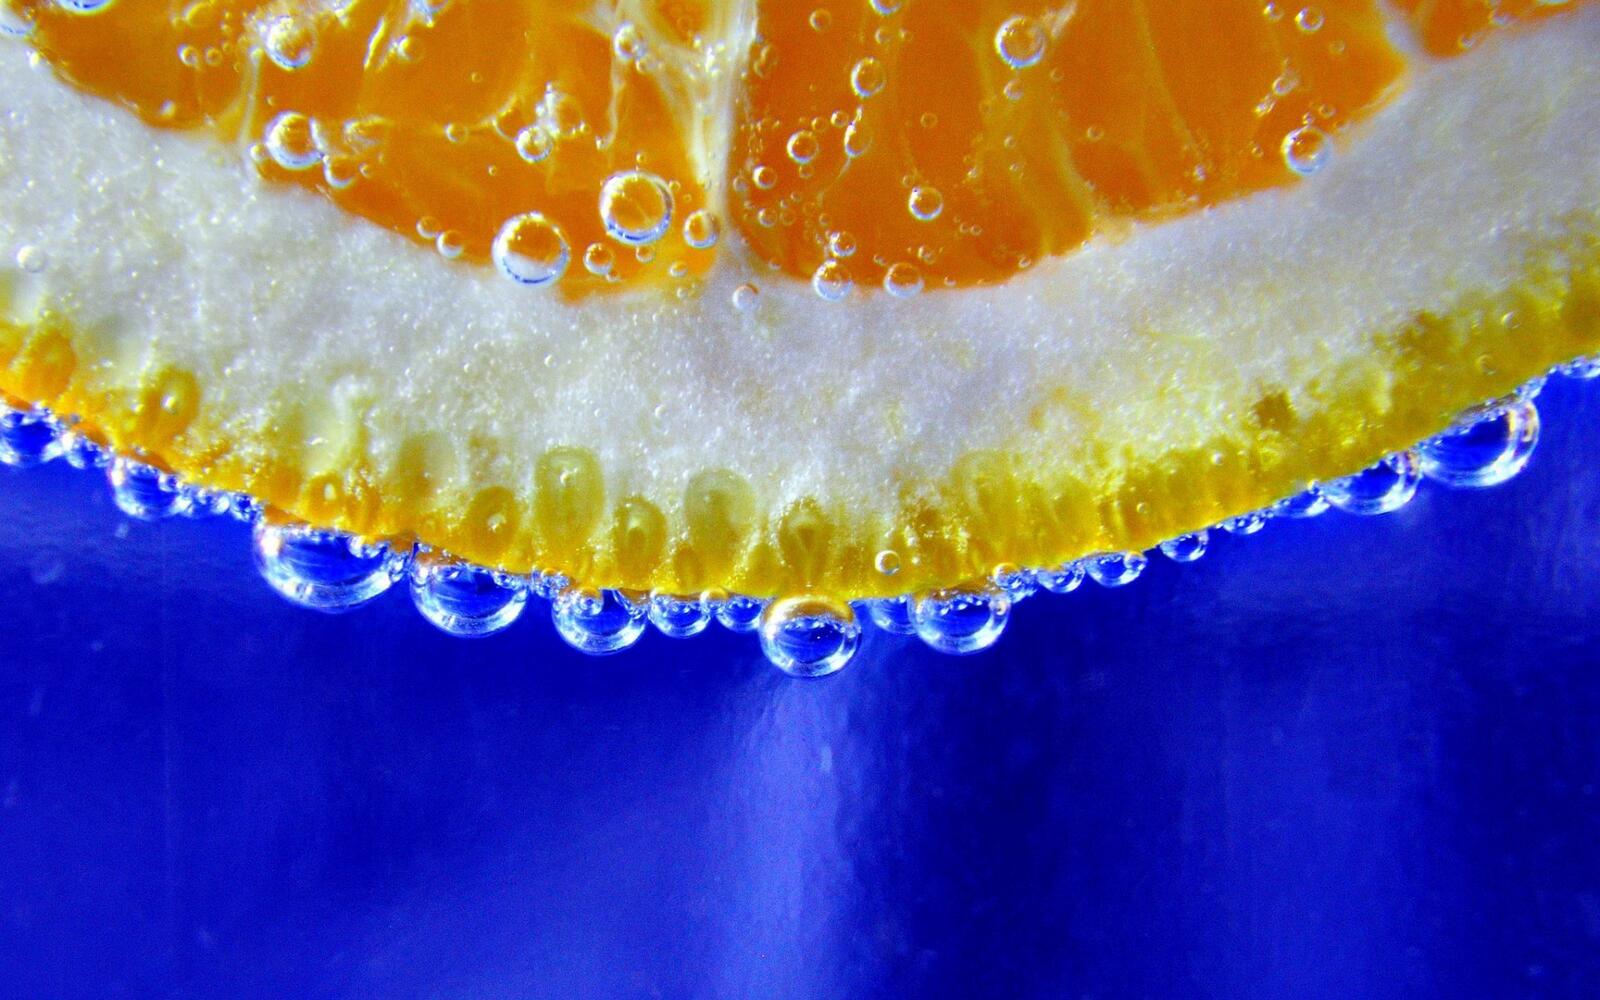 Wallpapers bubbles the orange drink on the desktop